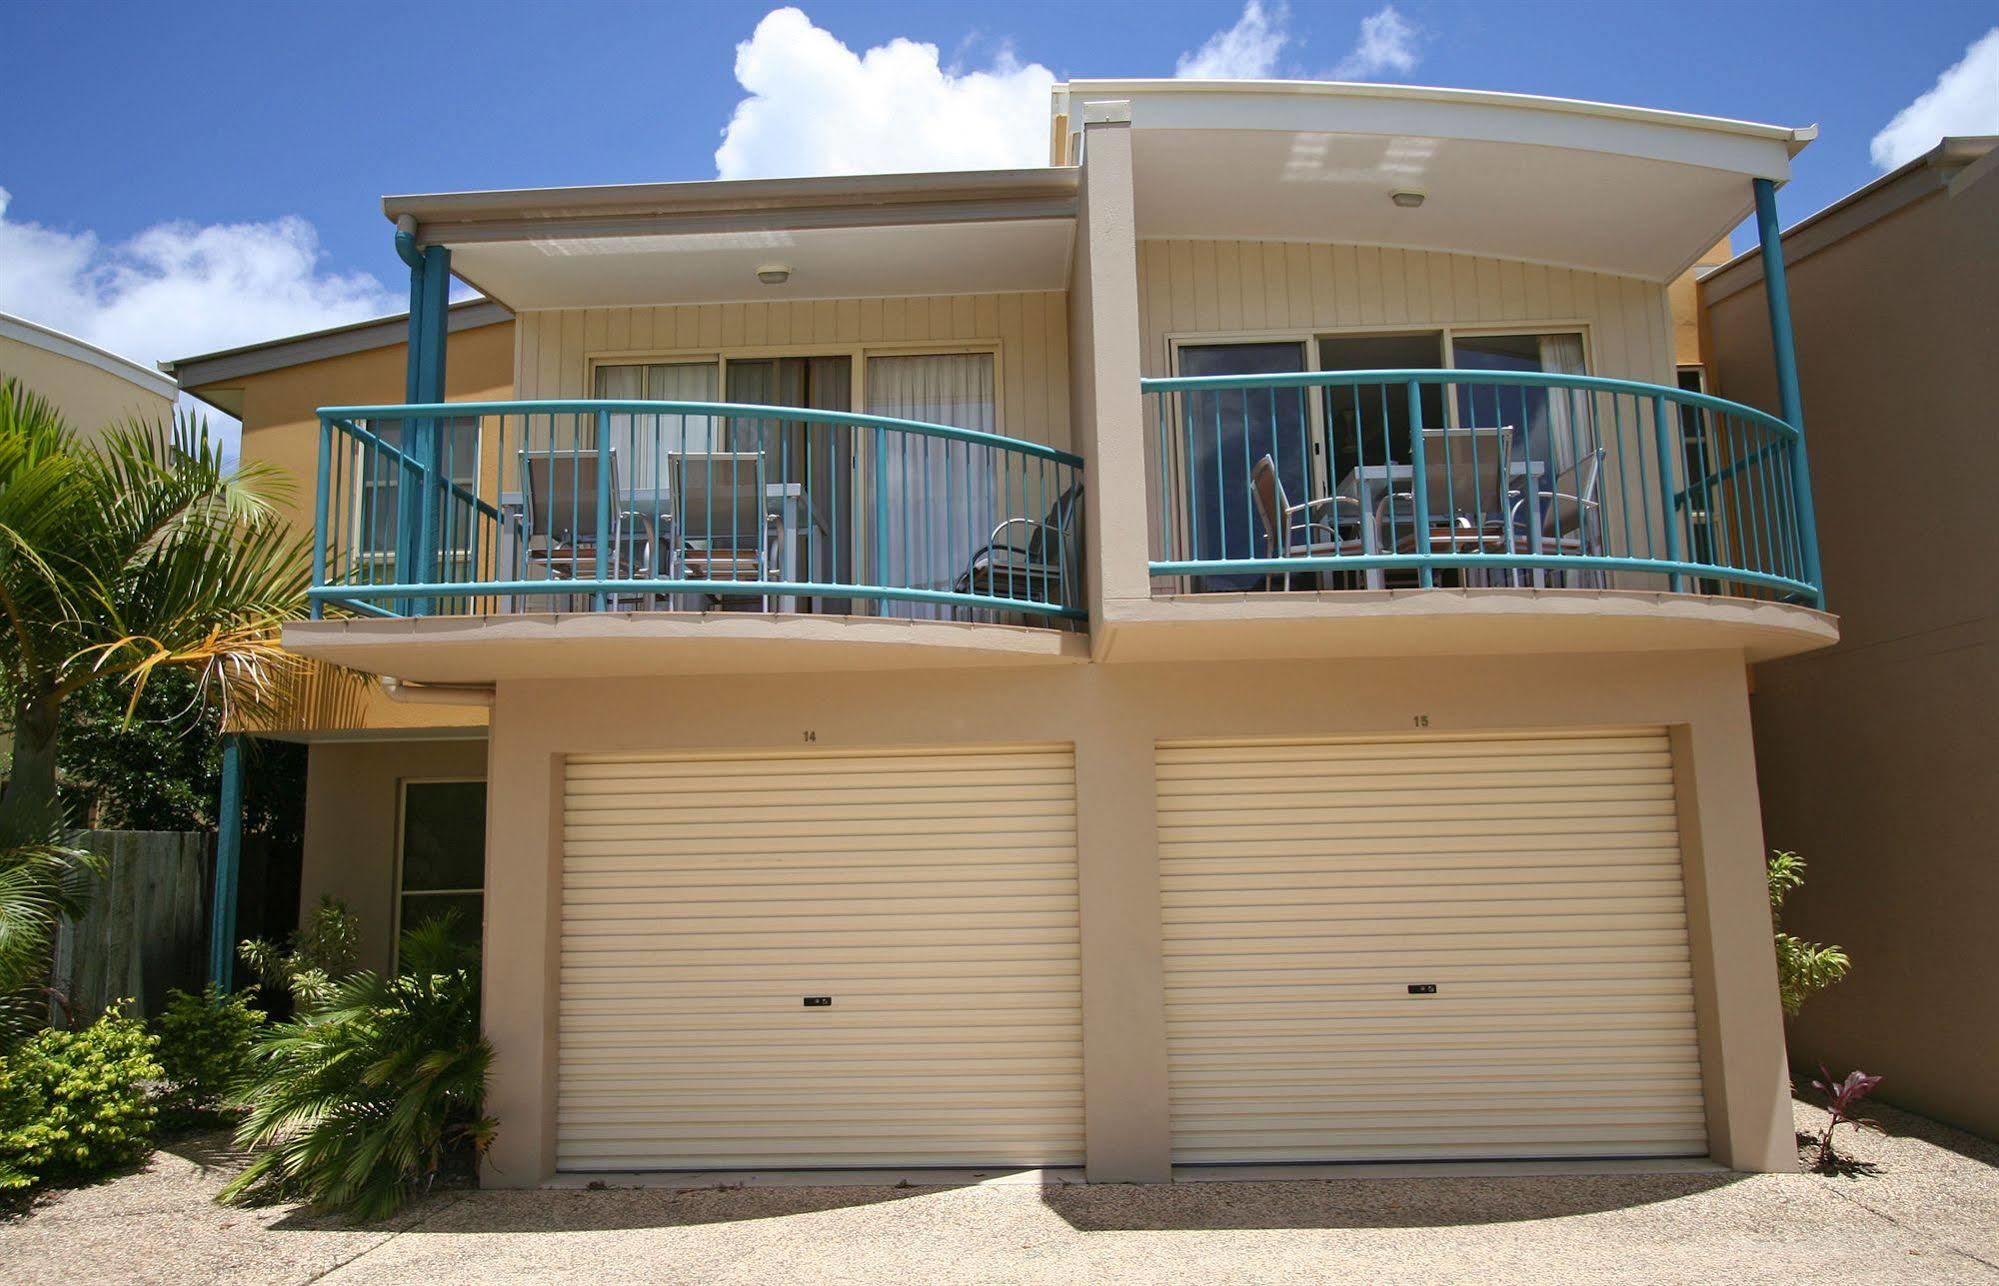 Coolum Beach Getaway Resort Exterior foto